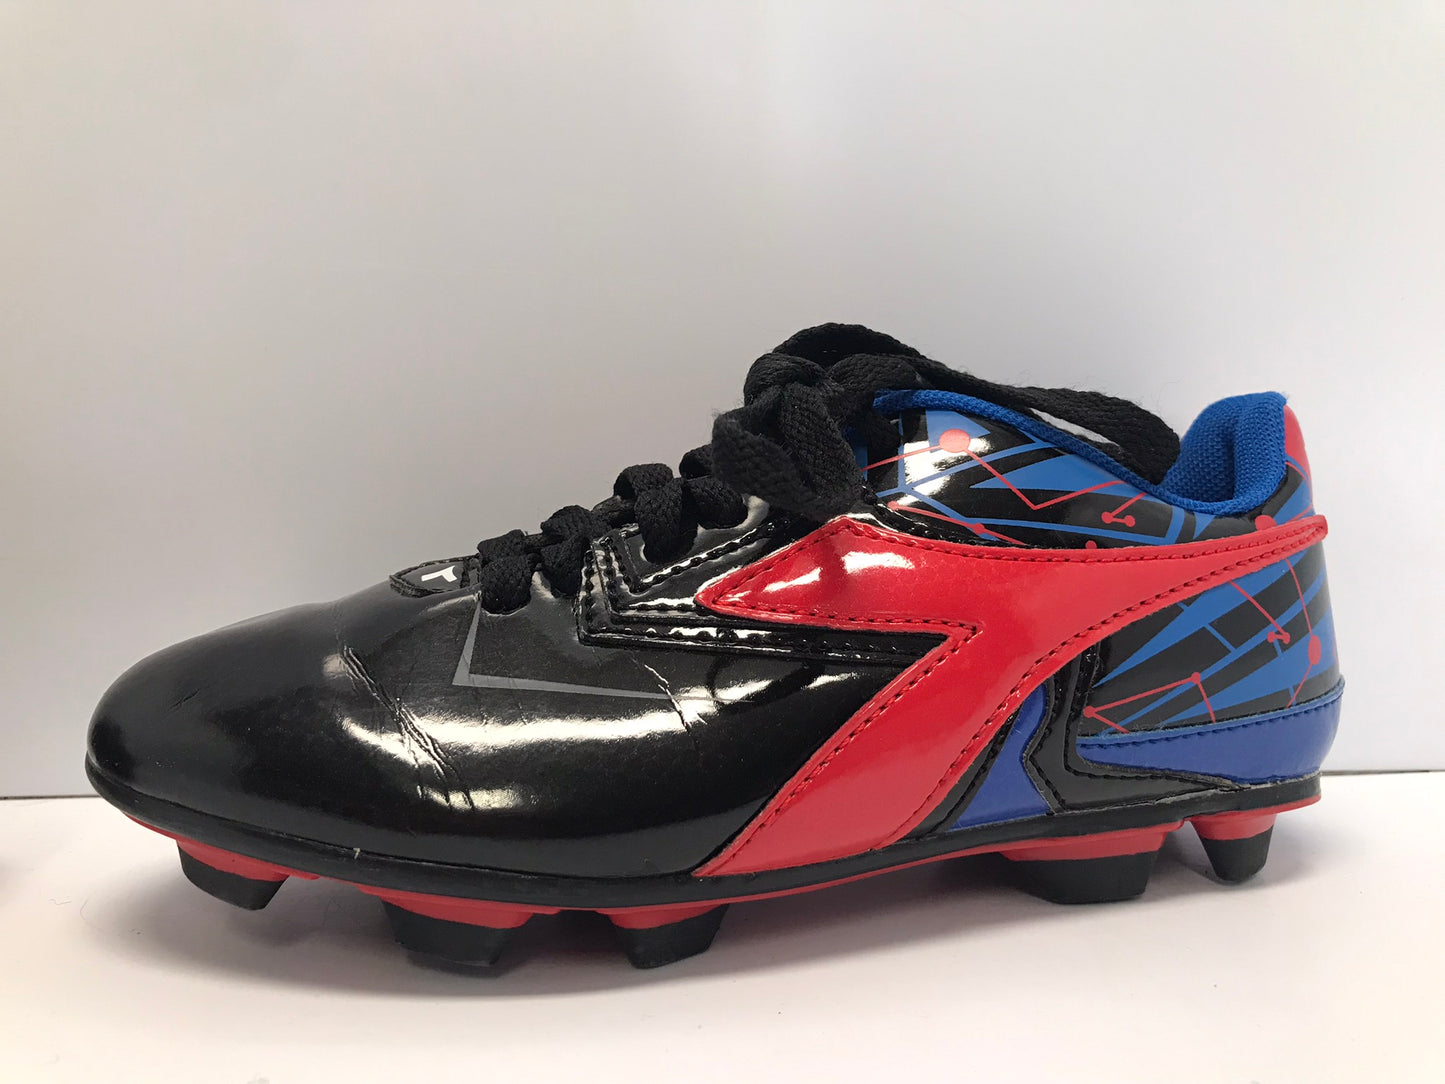 Soccer Shoes Cleats Child Size 1 Diadora Black Red Blue Excellent